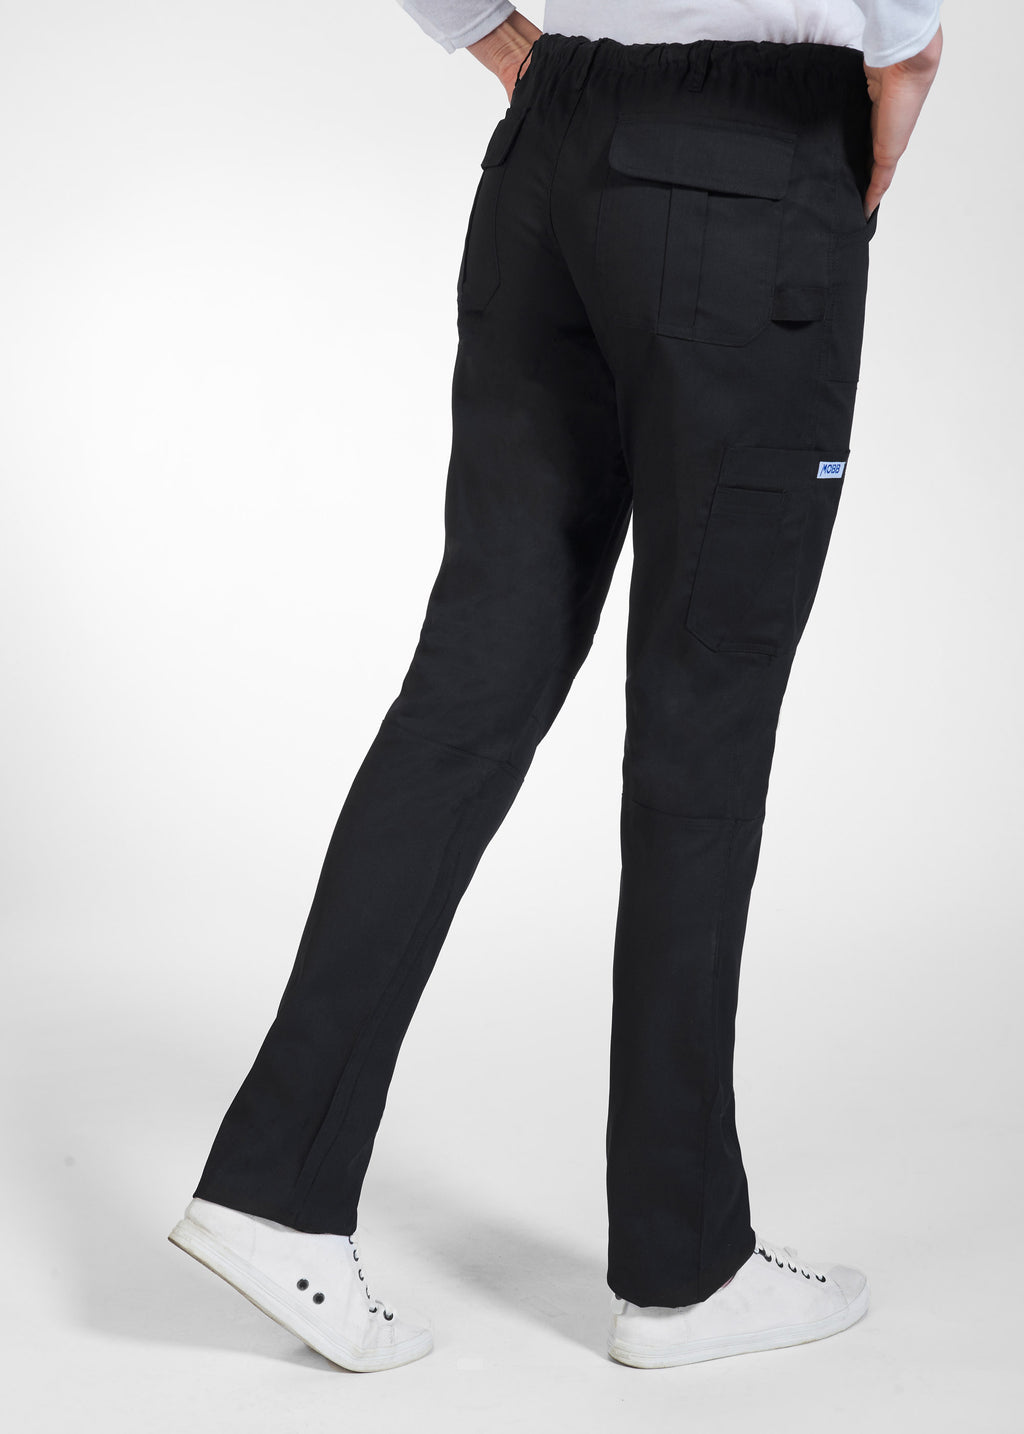 Unisex Basic Drawstring Scrub Pant by MOBB – Dixie Uniforms Ltd.